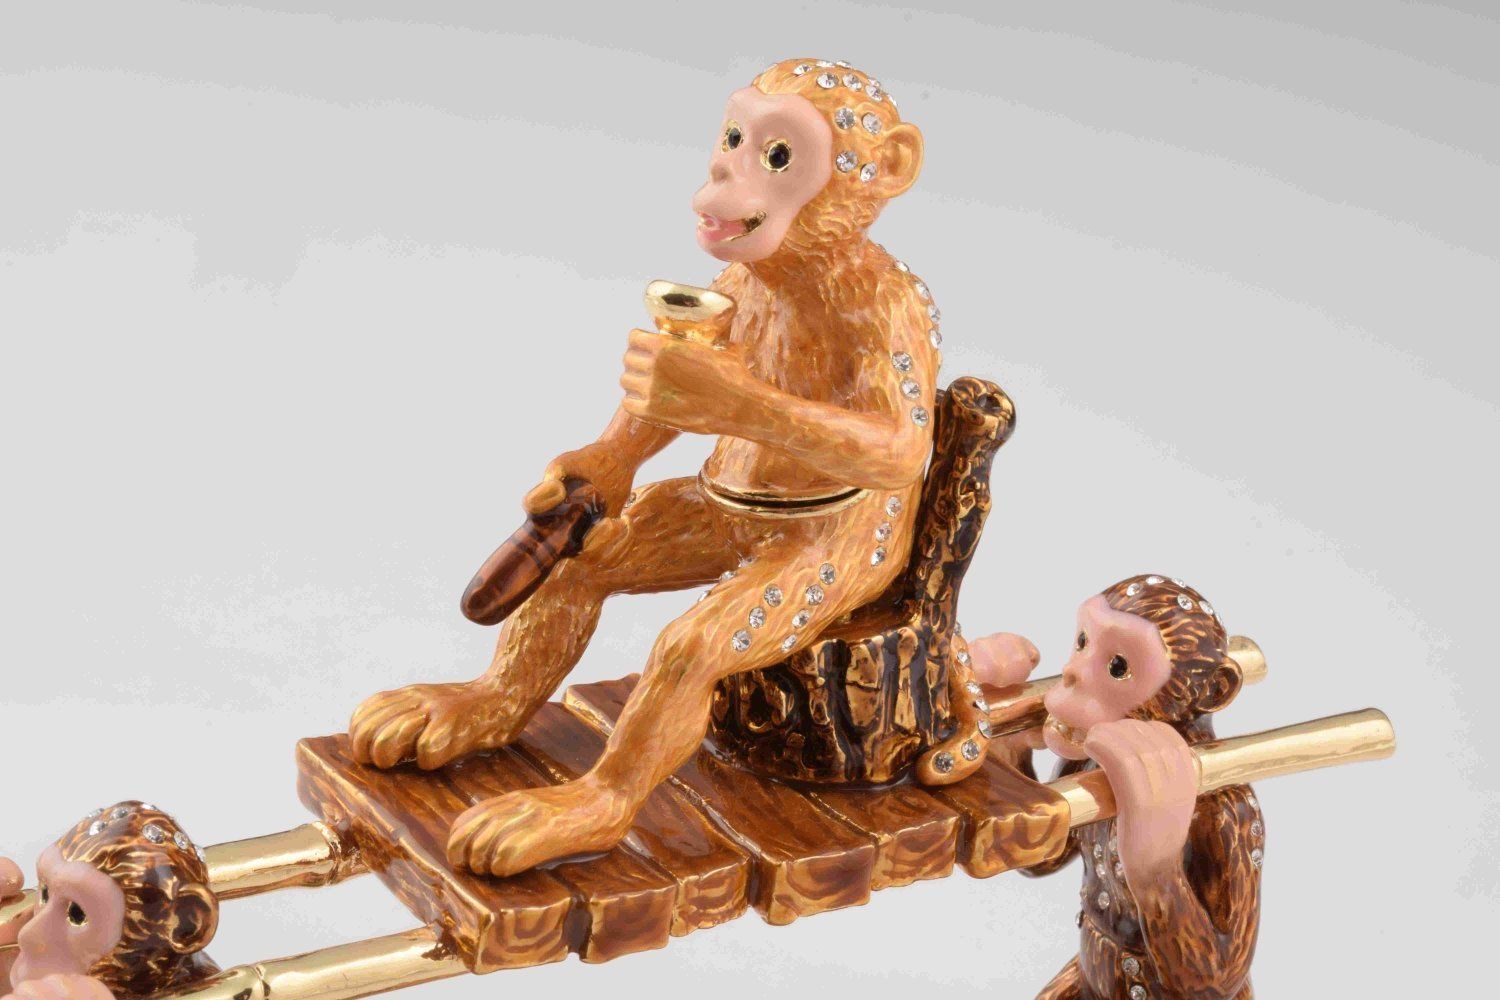 Monkeys Carrying Monkey King trinket box Keren Kopal